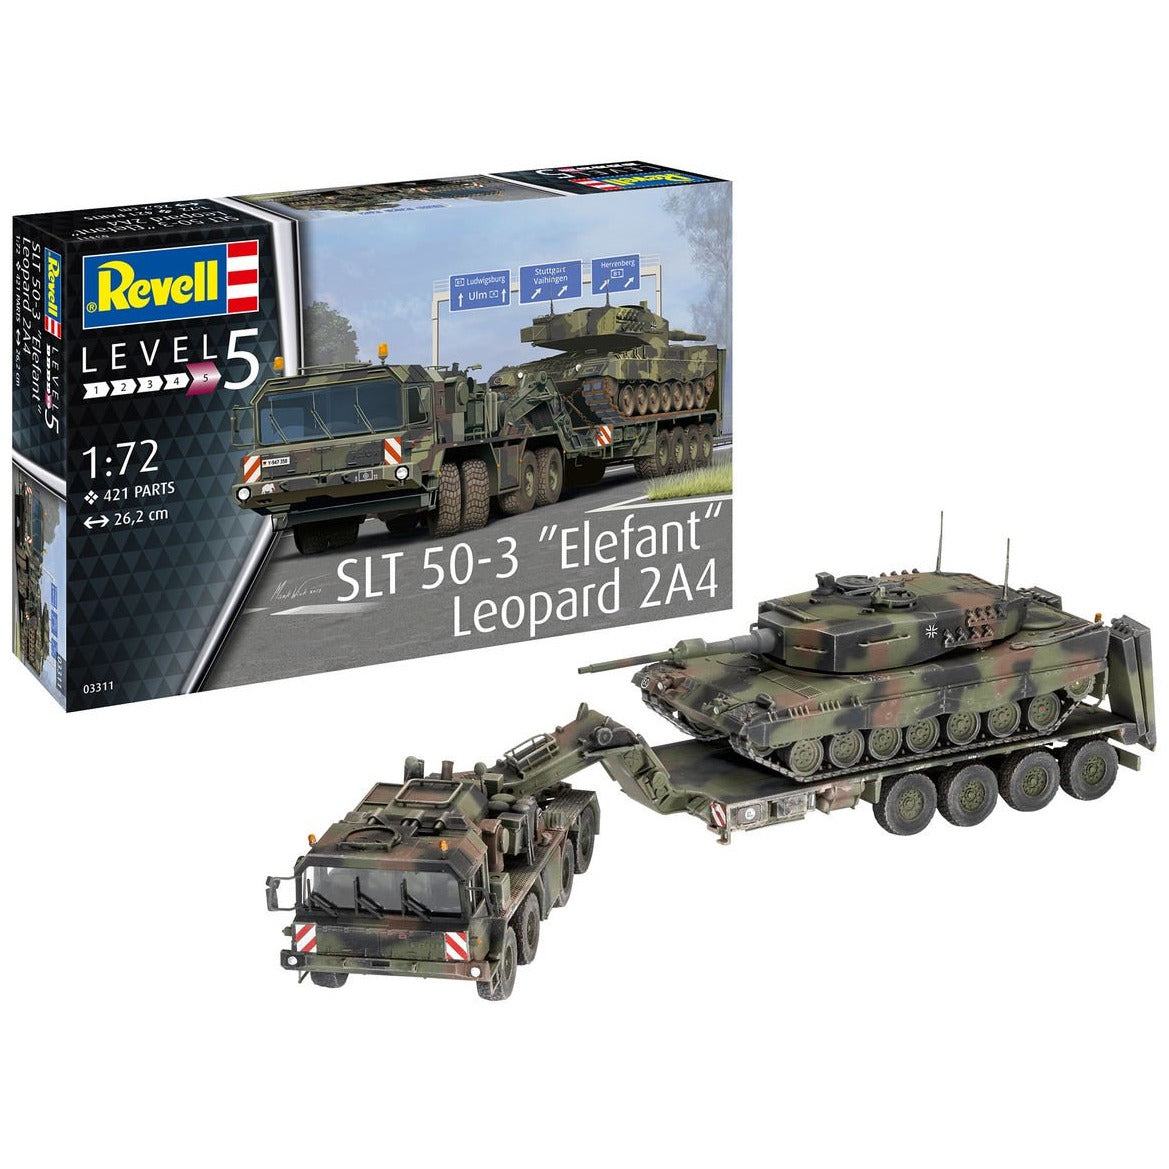 SLT-50-3 Elefant w/Leopard 2A4 1/72 by Revell